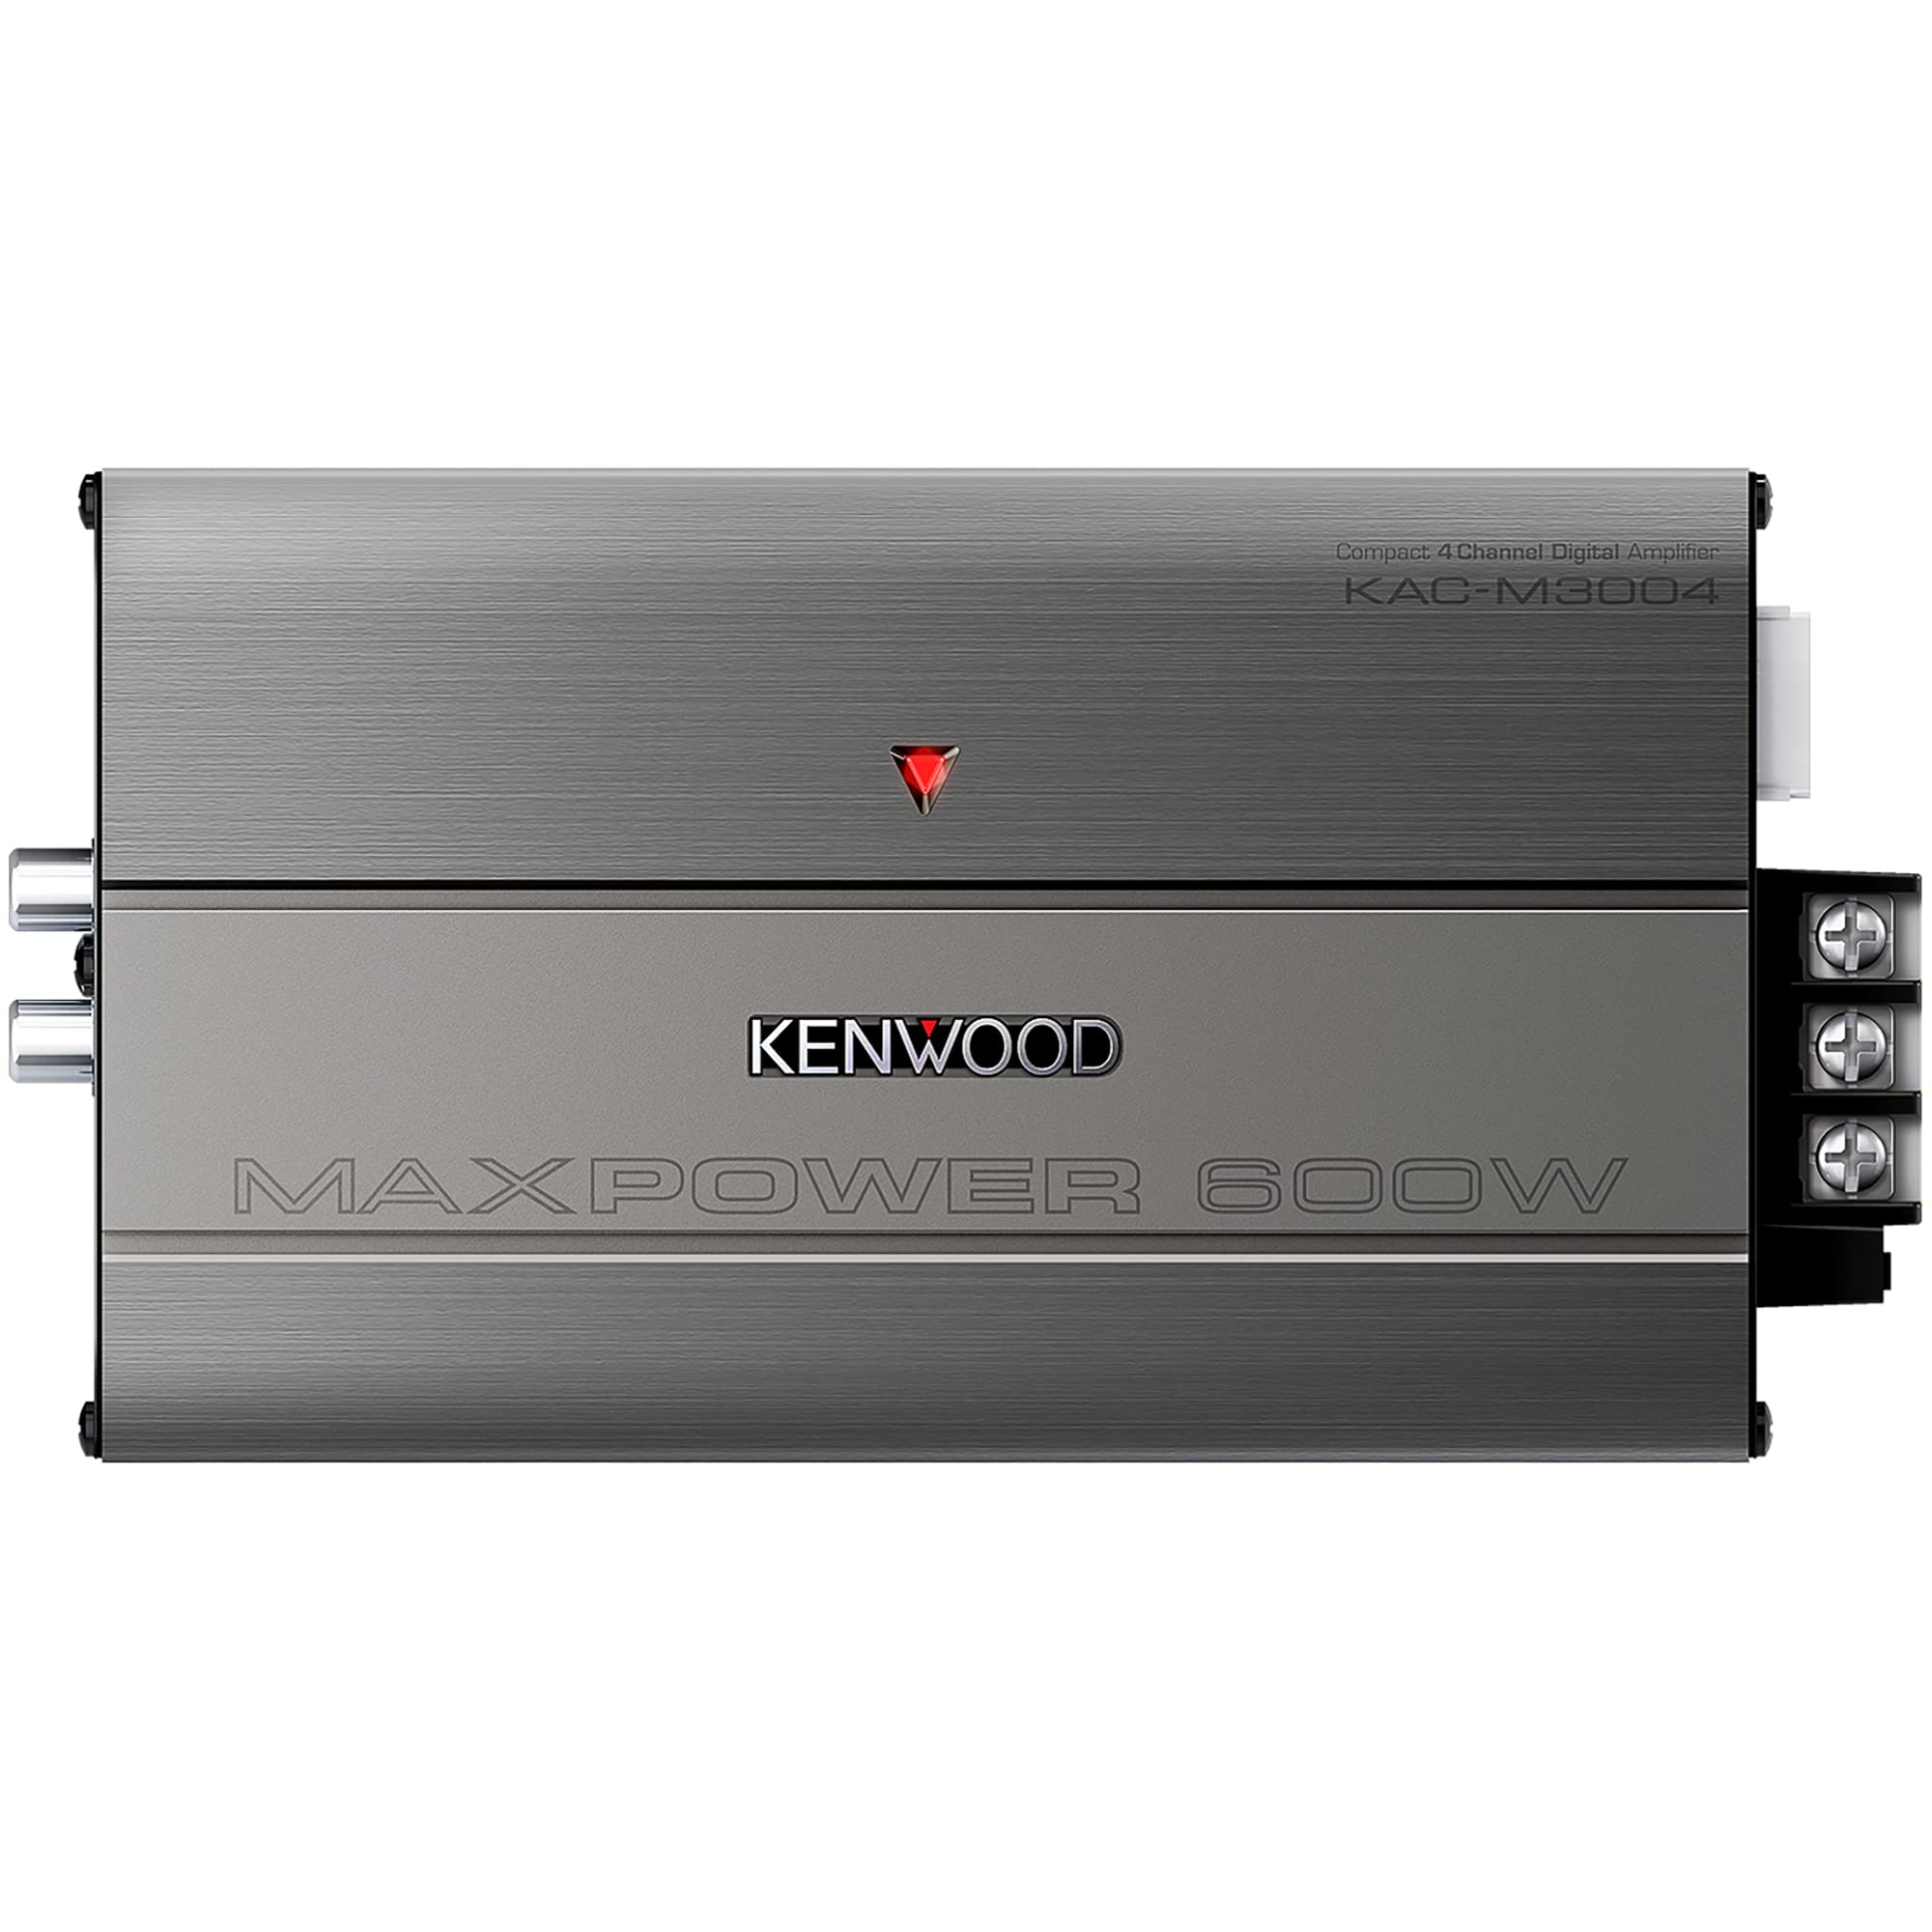 KENWOOD مكبر الصوت الرقمي KAC-M3004 المدمج 600 واط 4 قنوات للسيارة / البحرية / Powersports